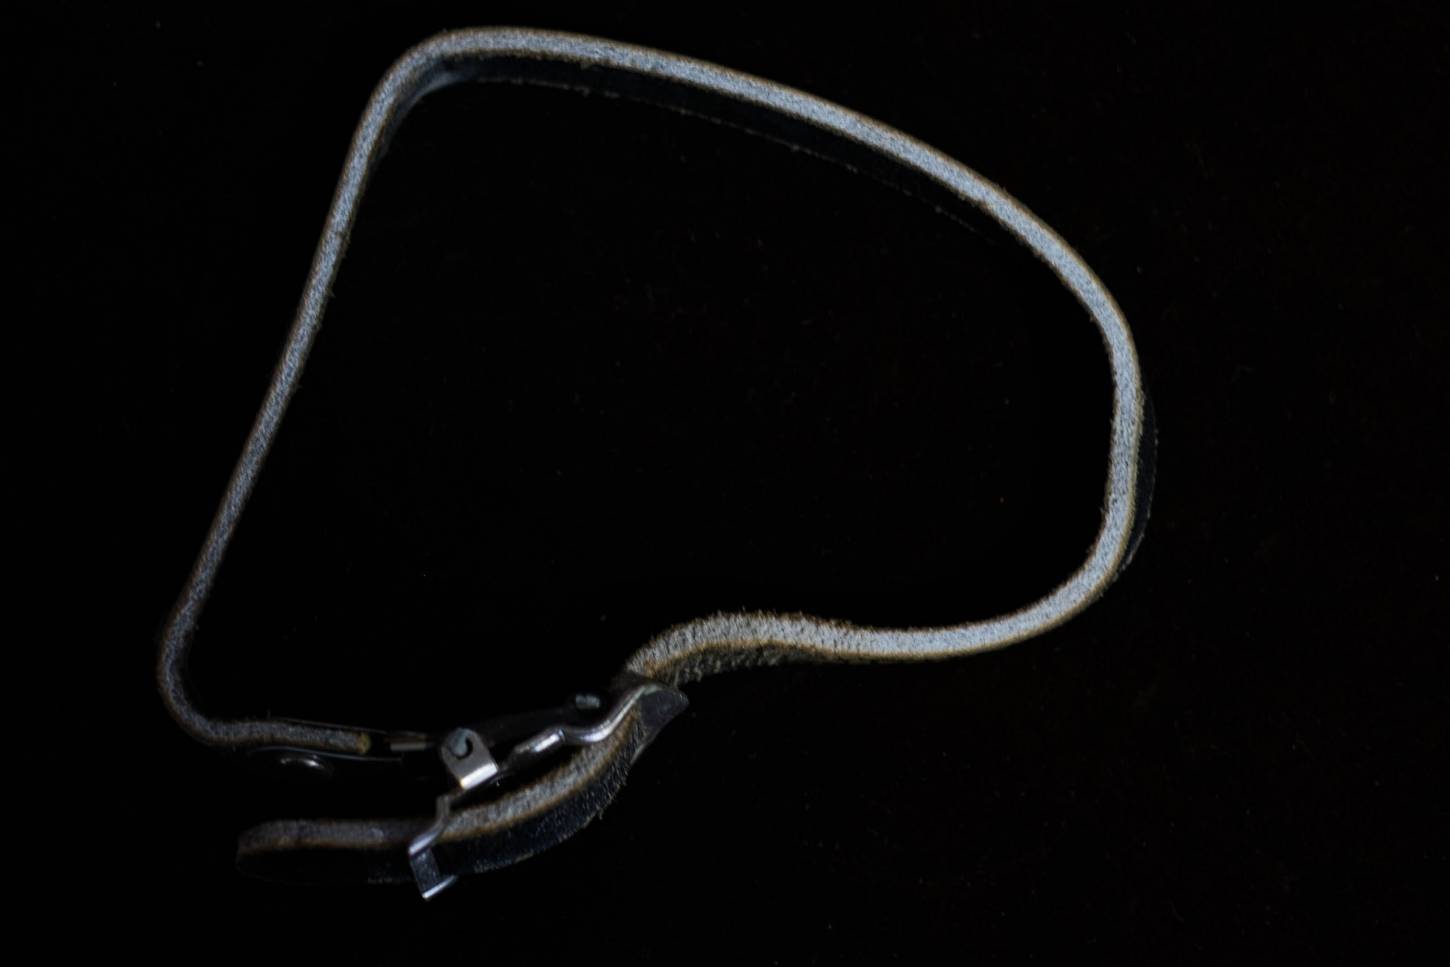 1x original Gipiemme pedal strap toe strap leather black for Crono Special Pedals Vintage